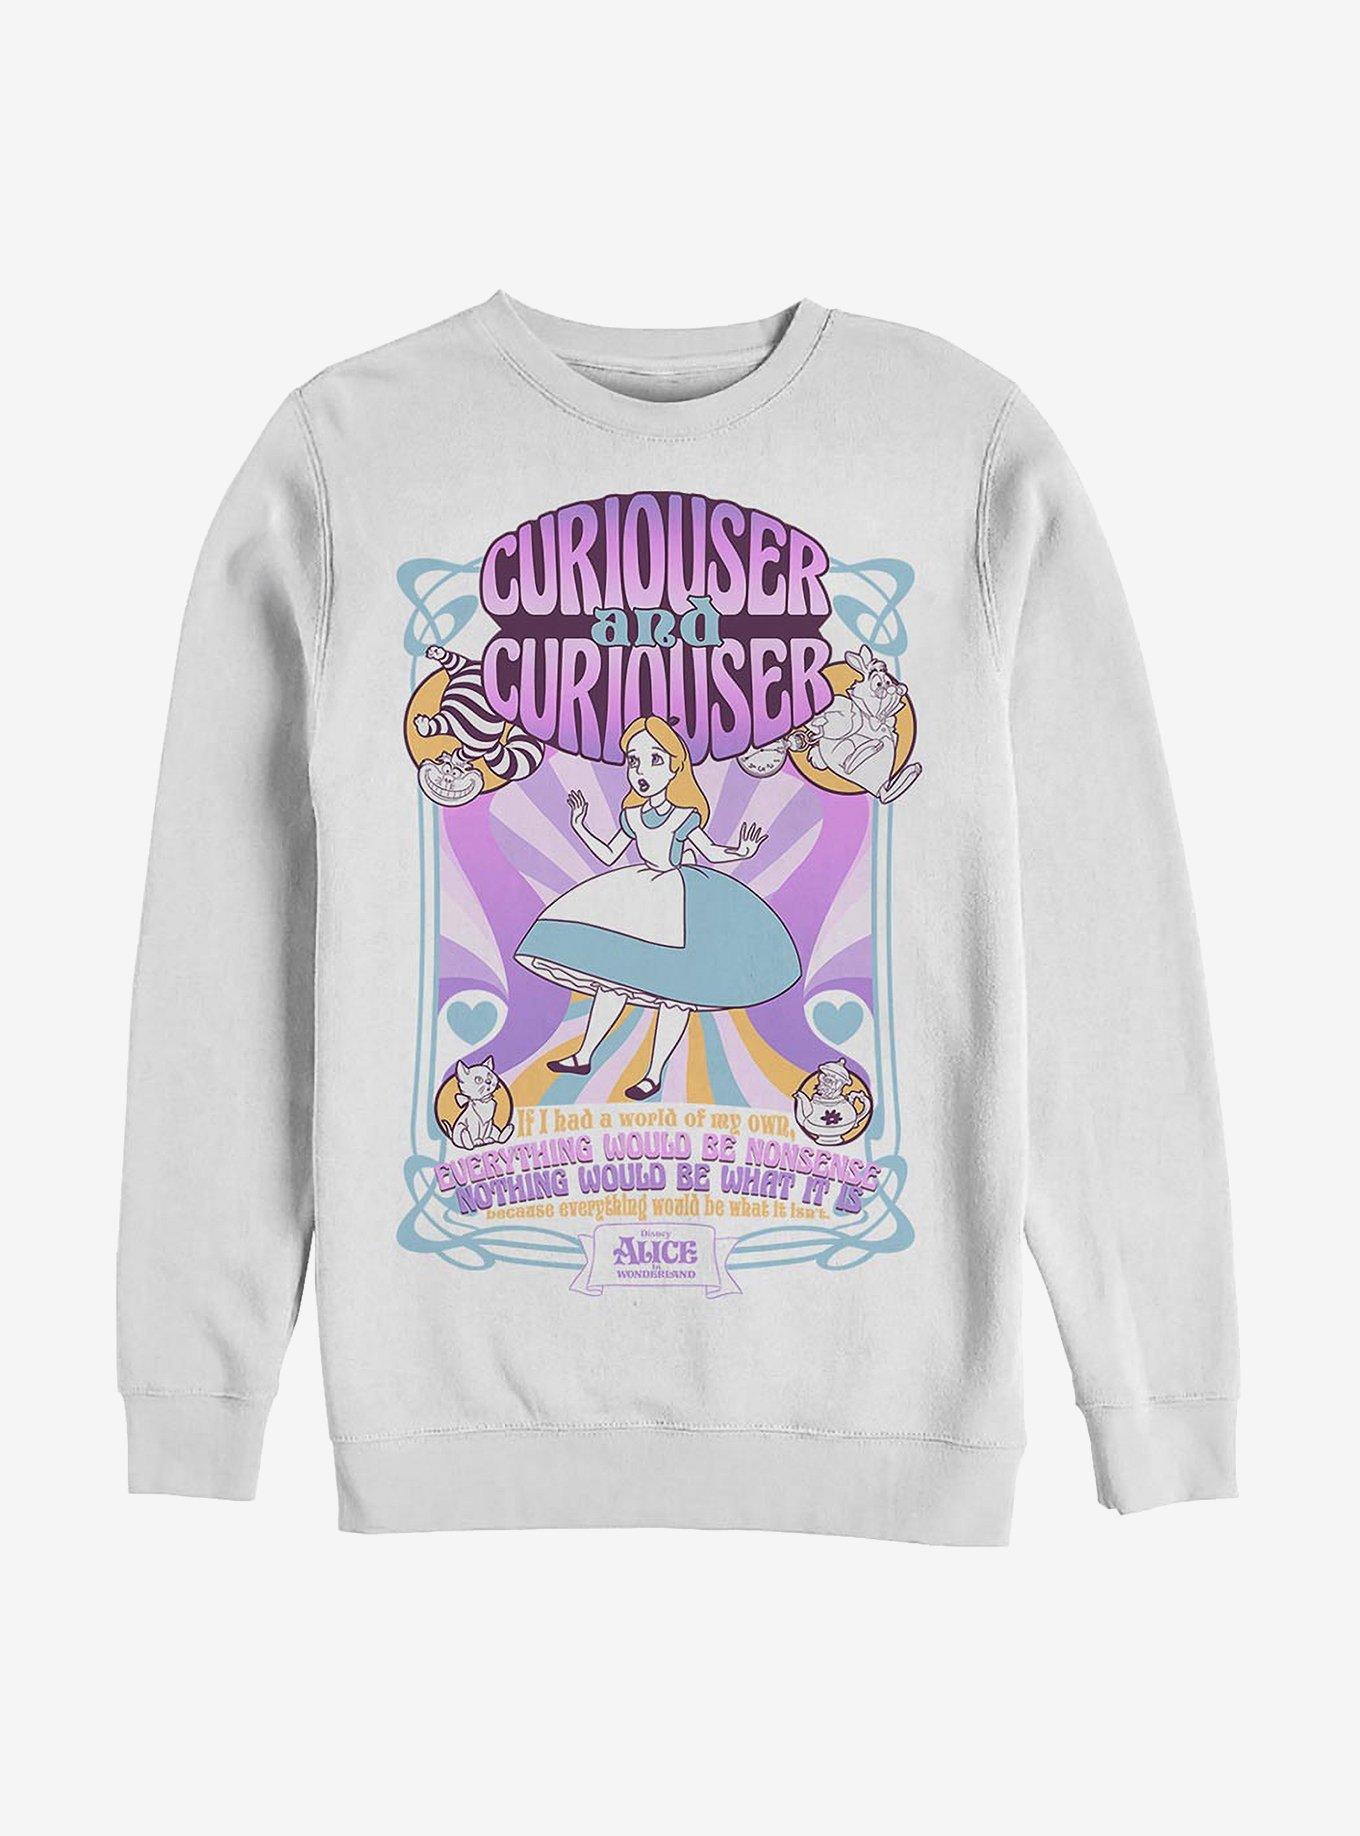 Disney Alice In Wonderland Psychedelic Nouveou Crew Sweatshirt, WHITE, hi-res